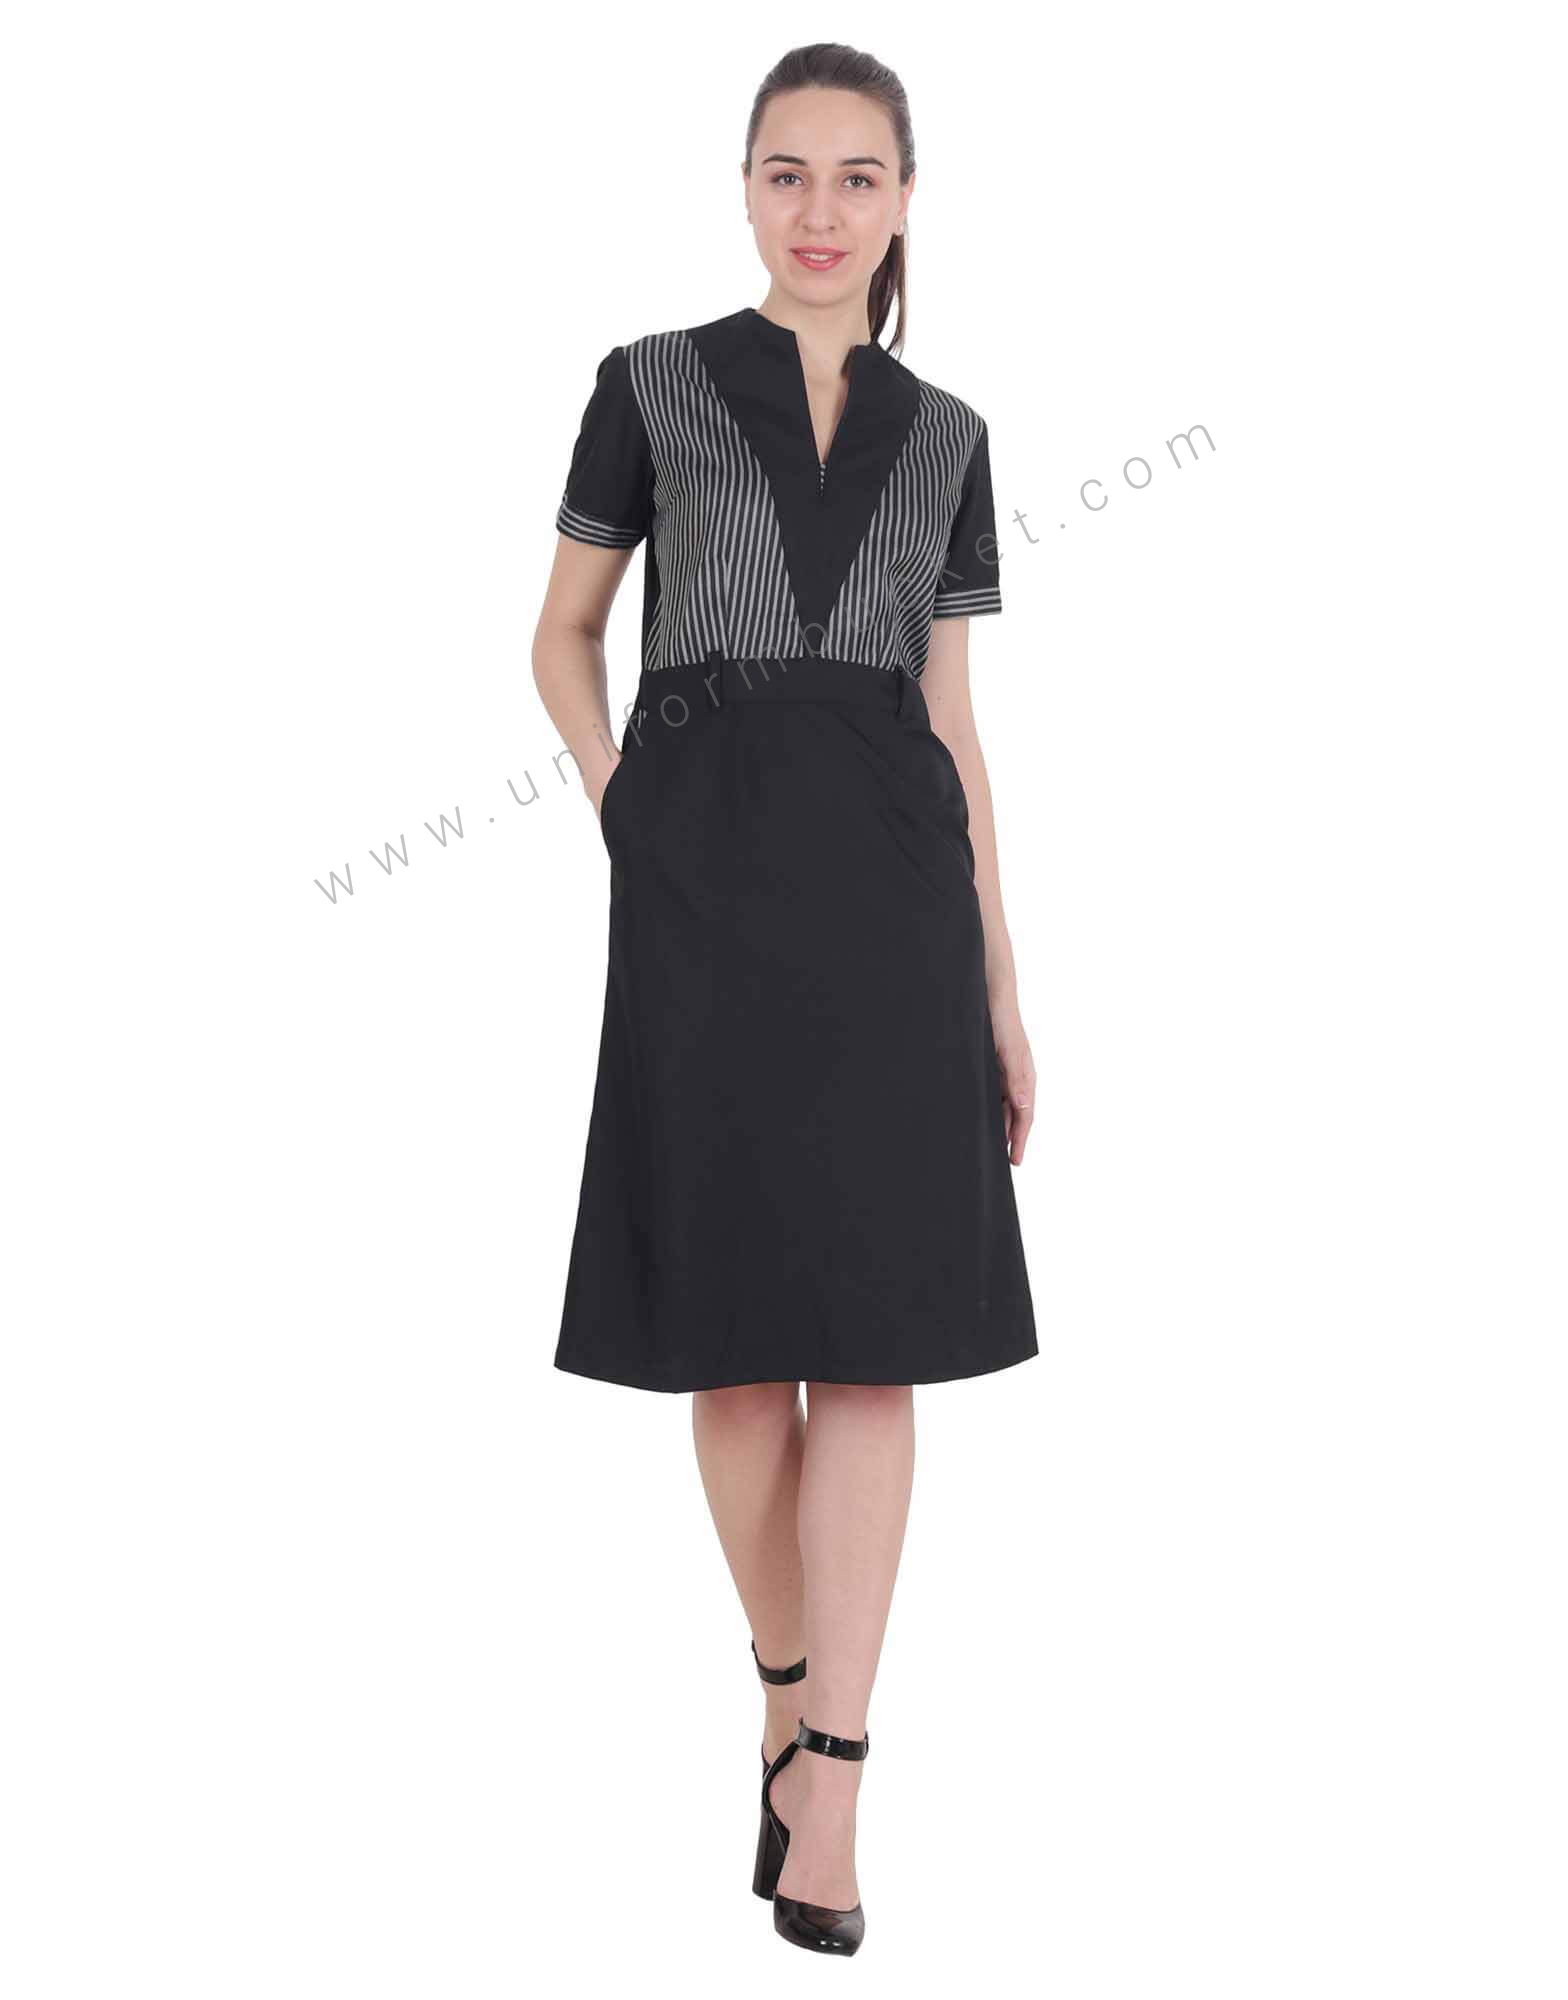 Formal Black Stylish Dress With Zebra Pattern